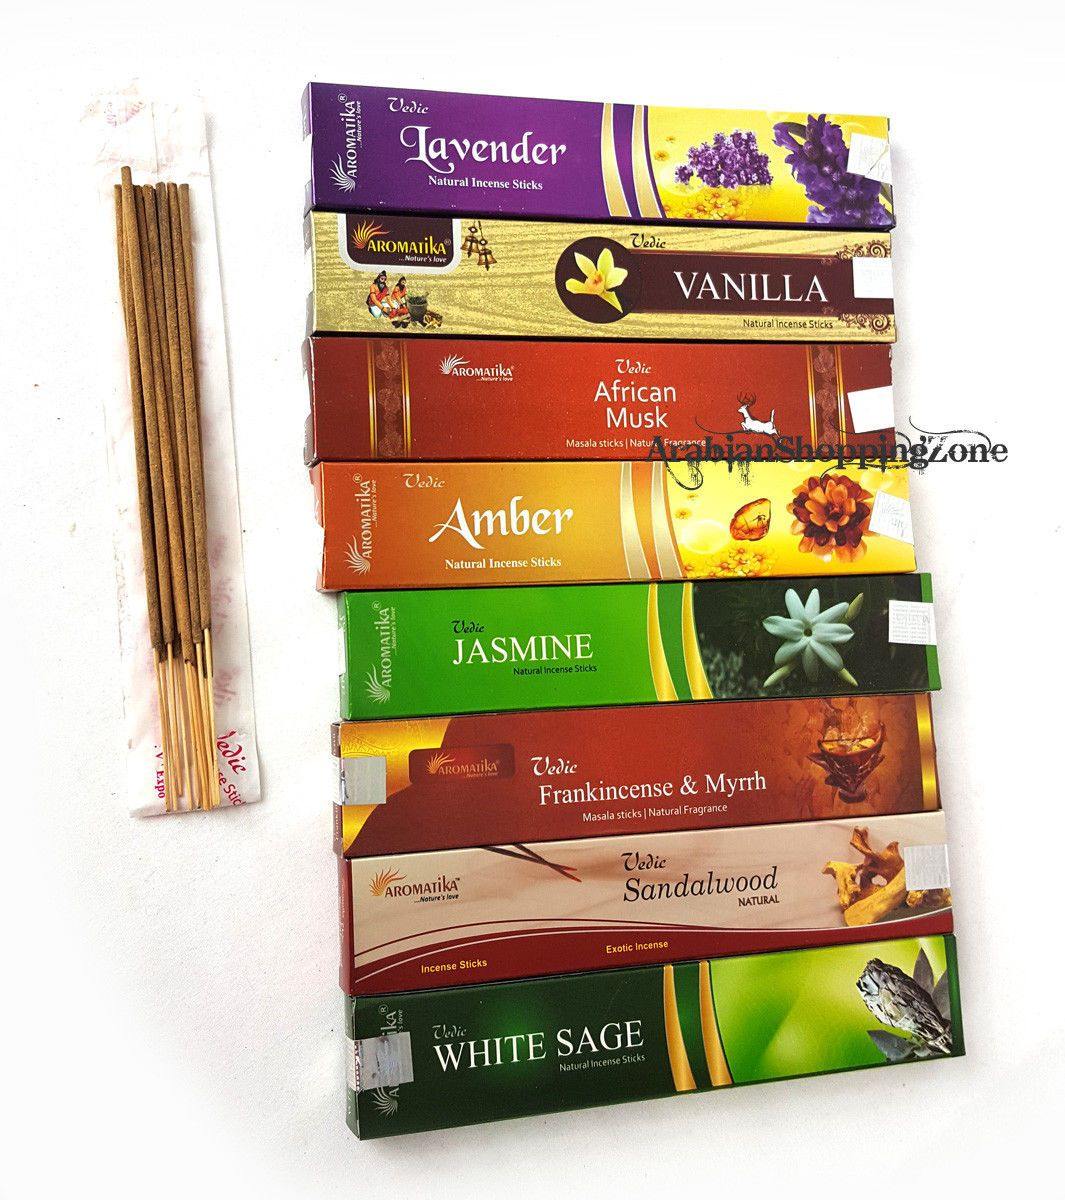 Vedic Aromatika Natural Incense Sticks 8" - 12 sticks  Encens - Arabian Shopping Zone